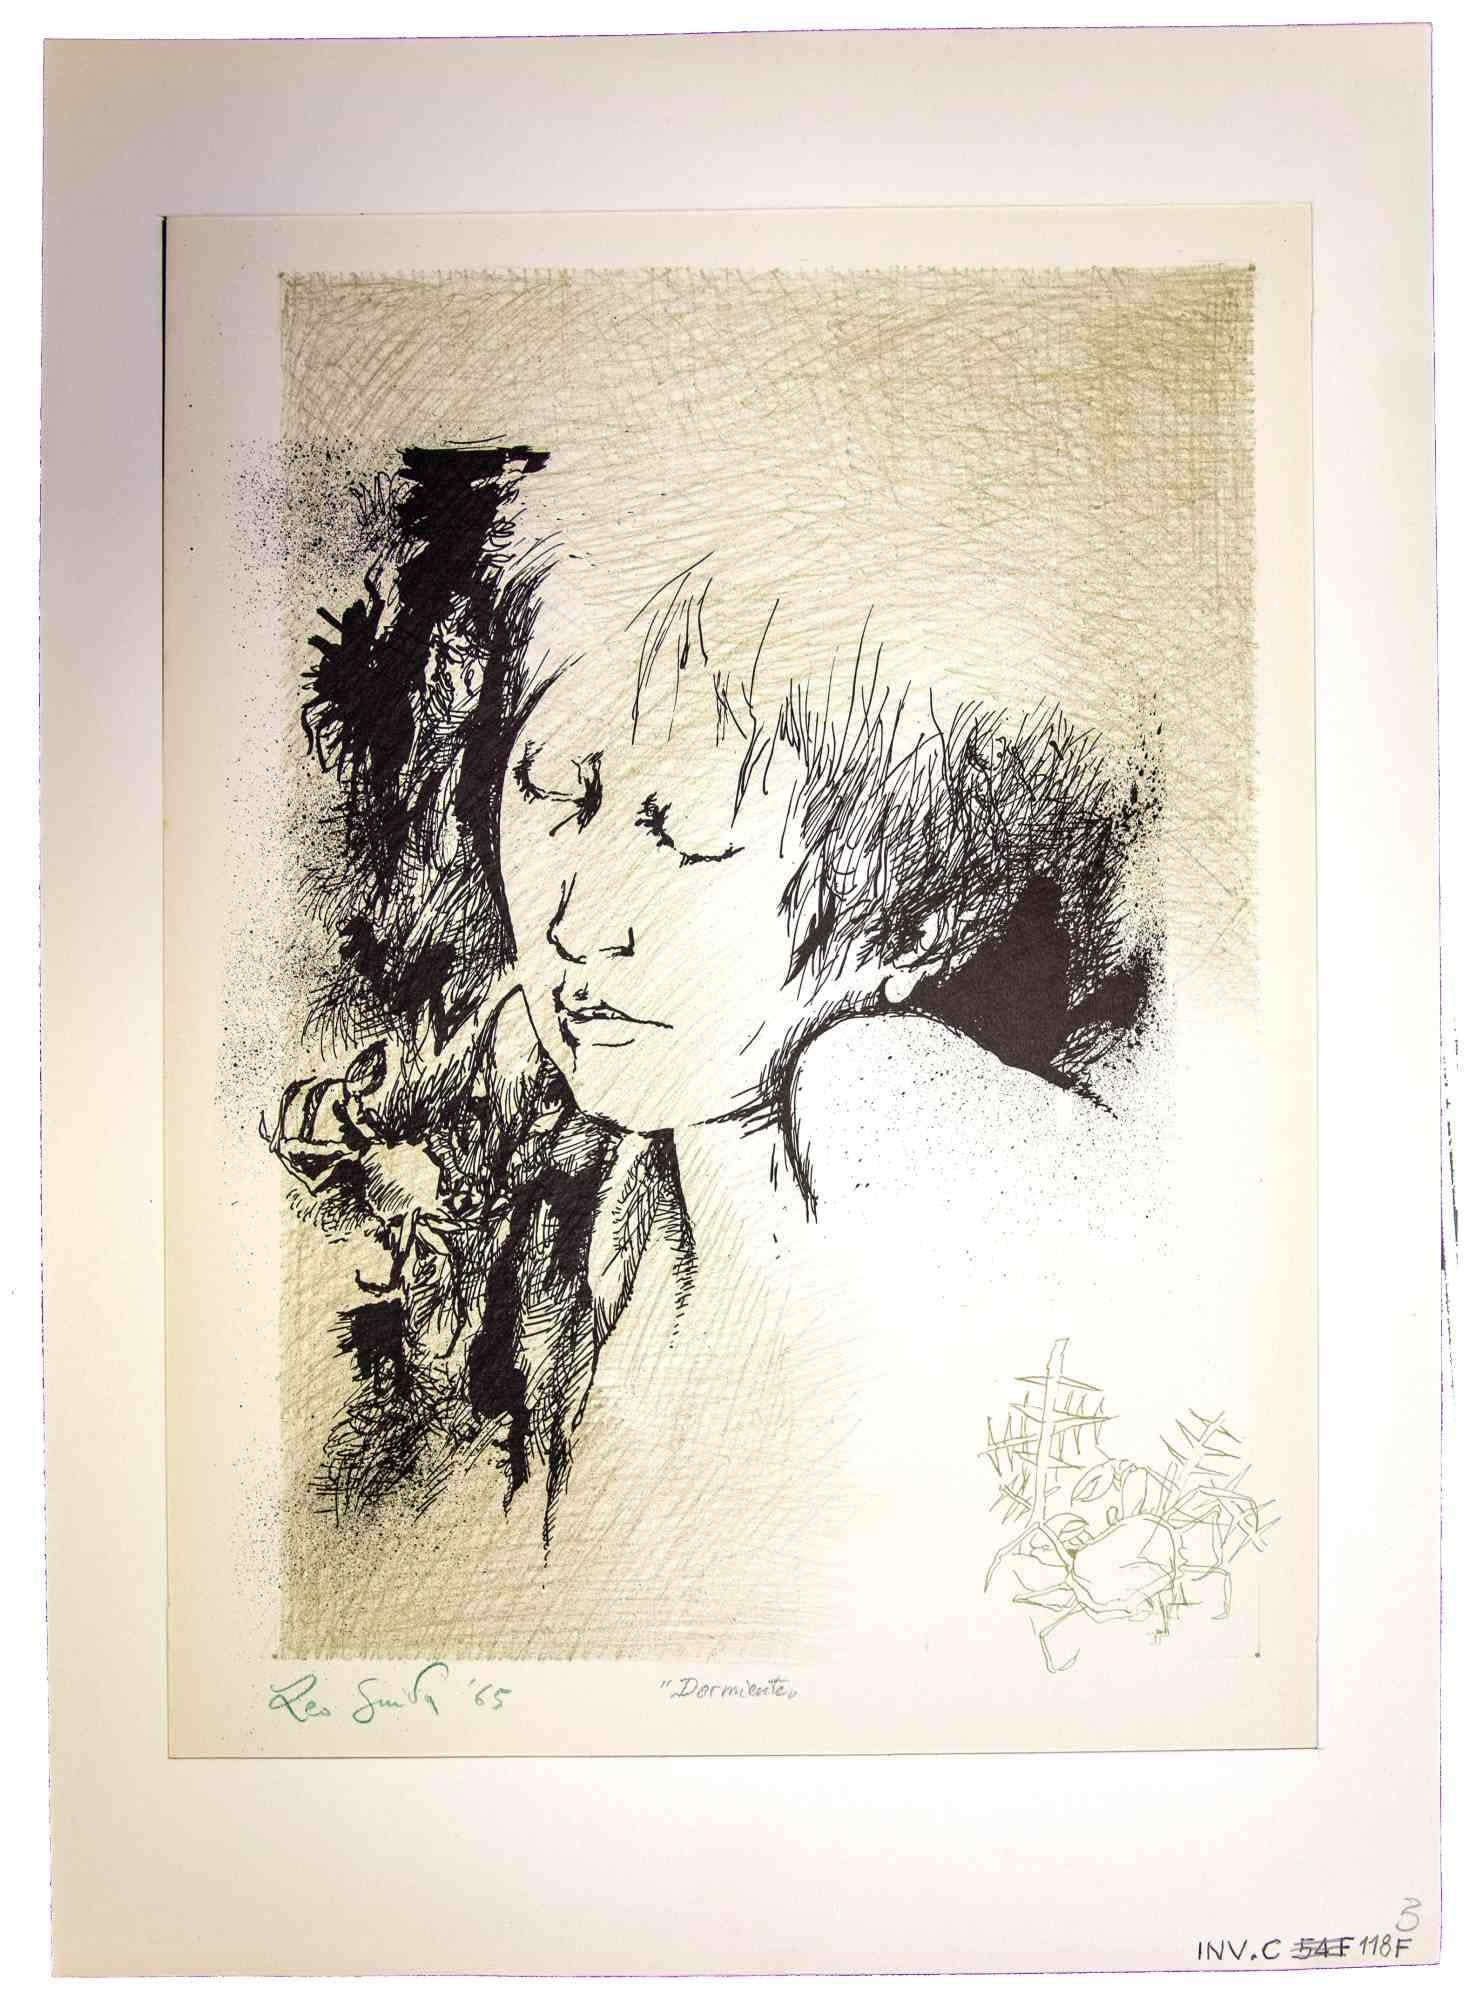 Portrait - Original Print by Leo Guida - 1965